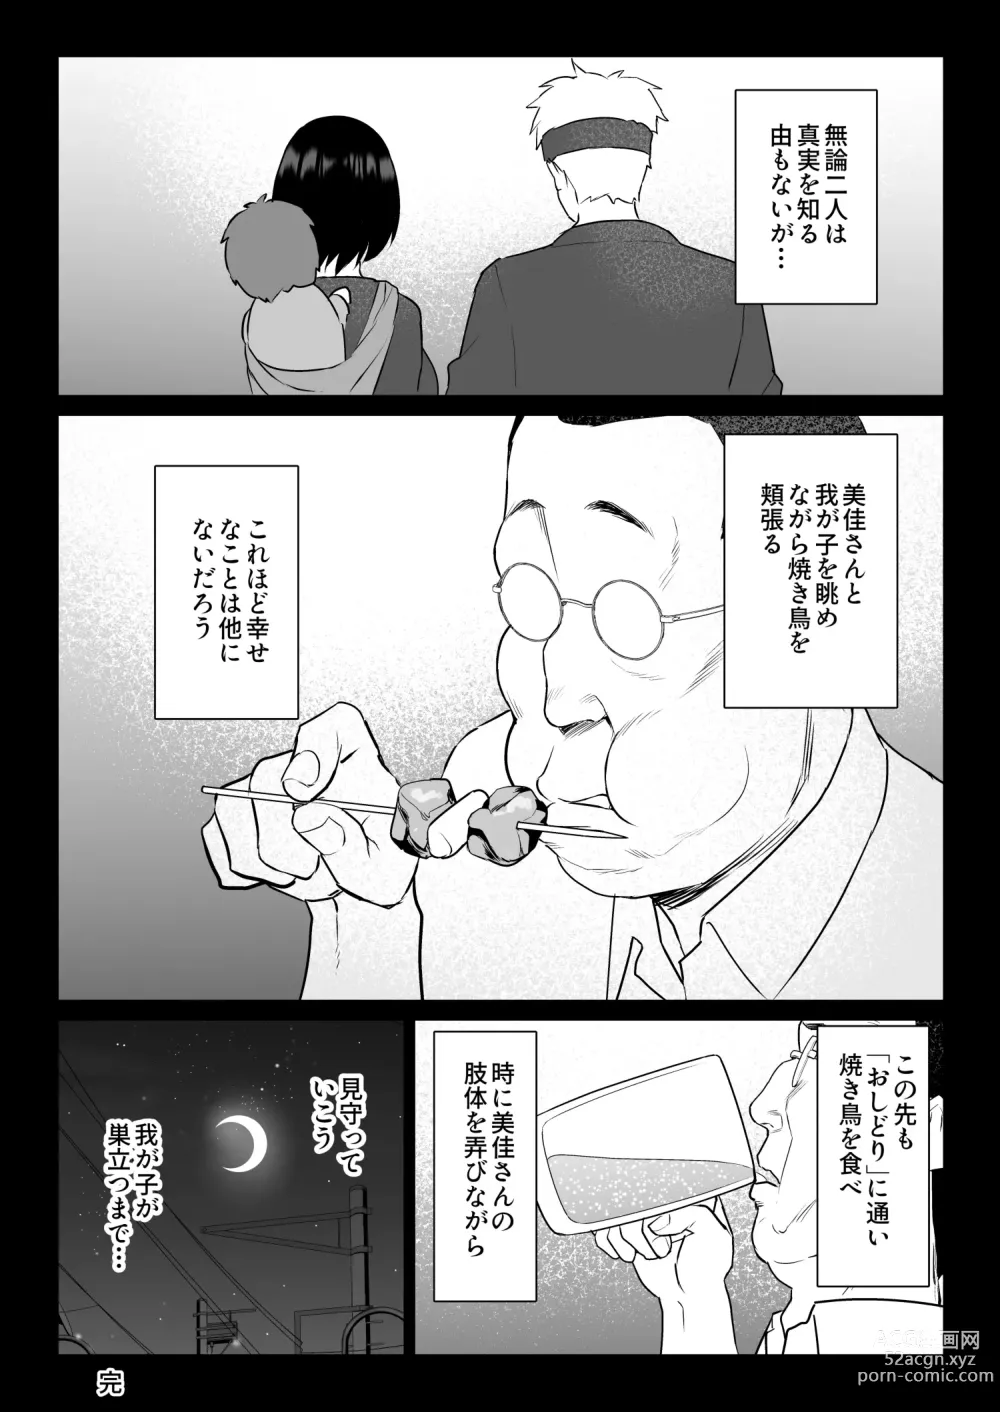 Page 84 of doujinshi Oshidori Fuufu Yakitorare